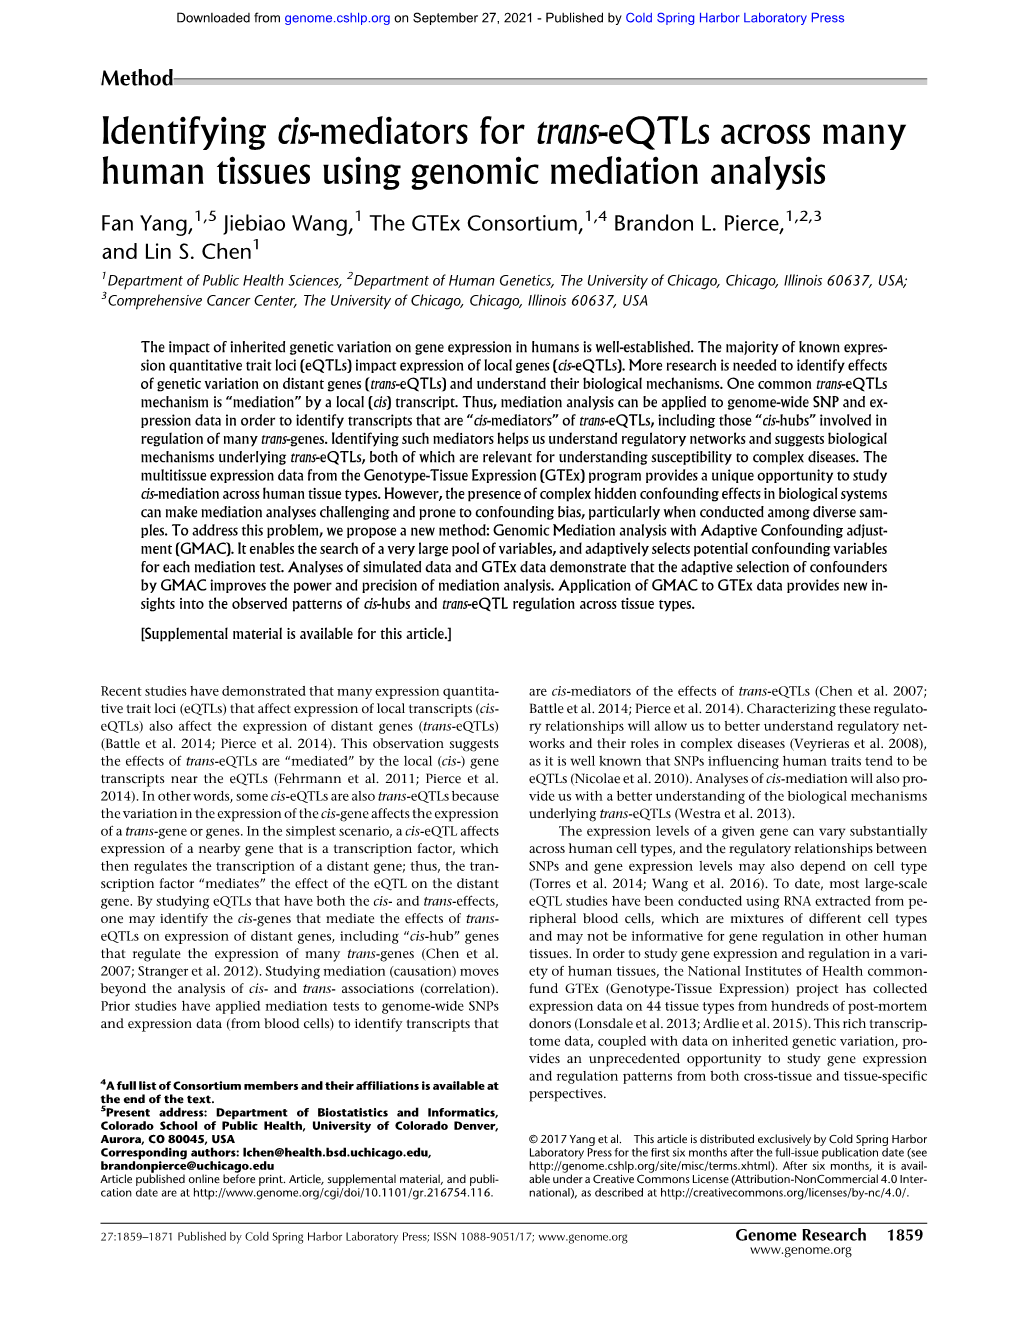 Identifying Cis-Mediators for Trans-Eqtls Across Many Human Tissues Using Genomic Mediation Analysis